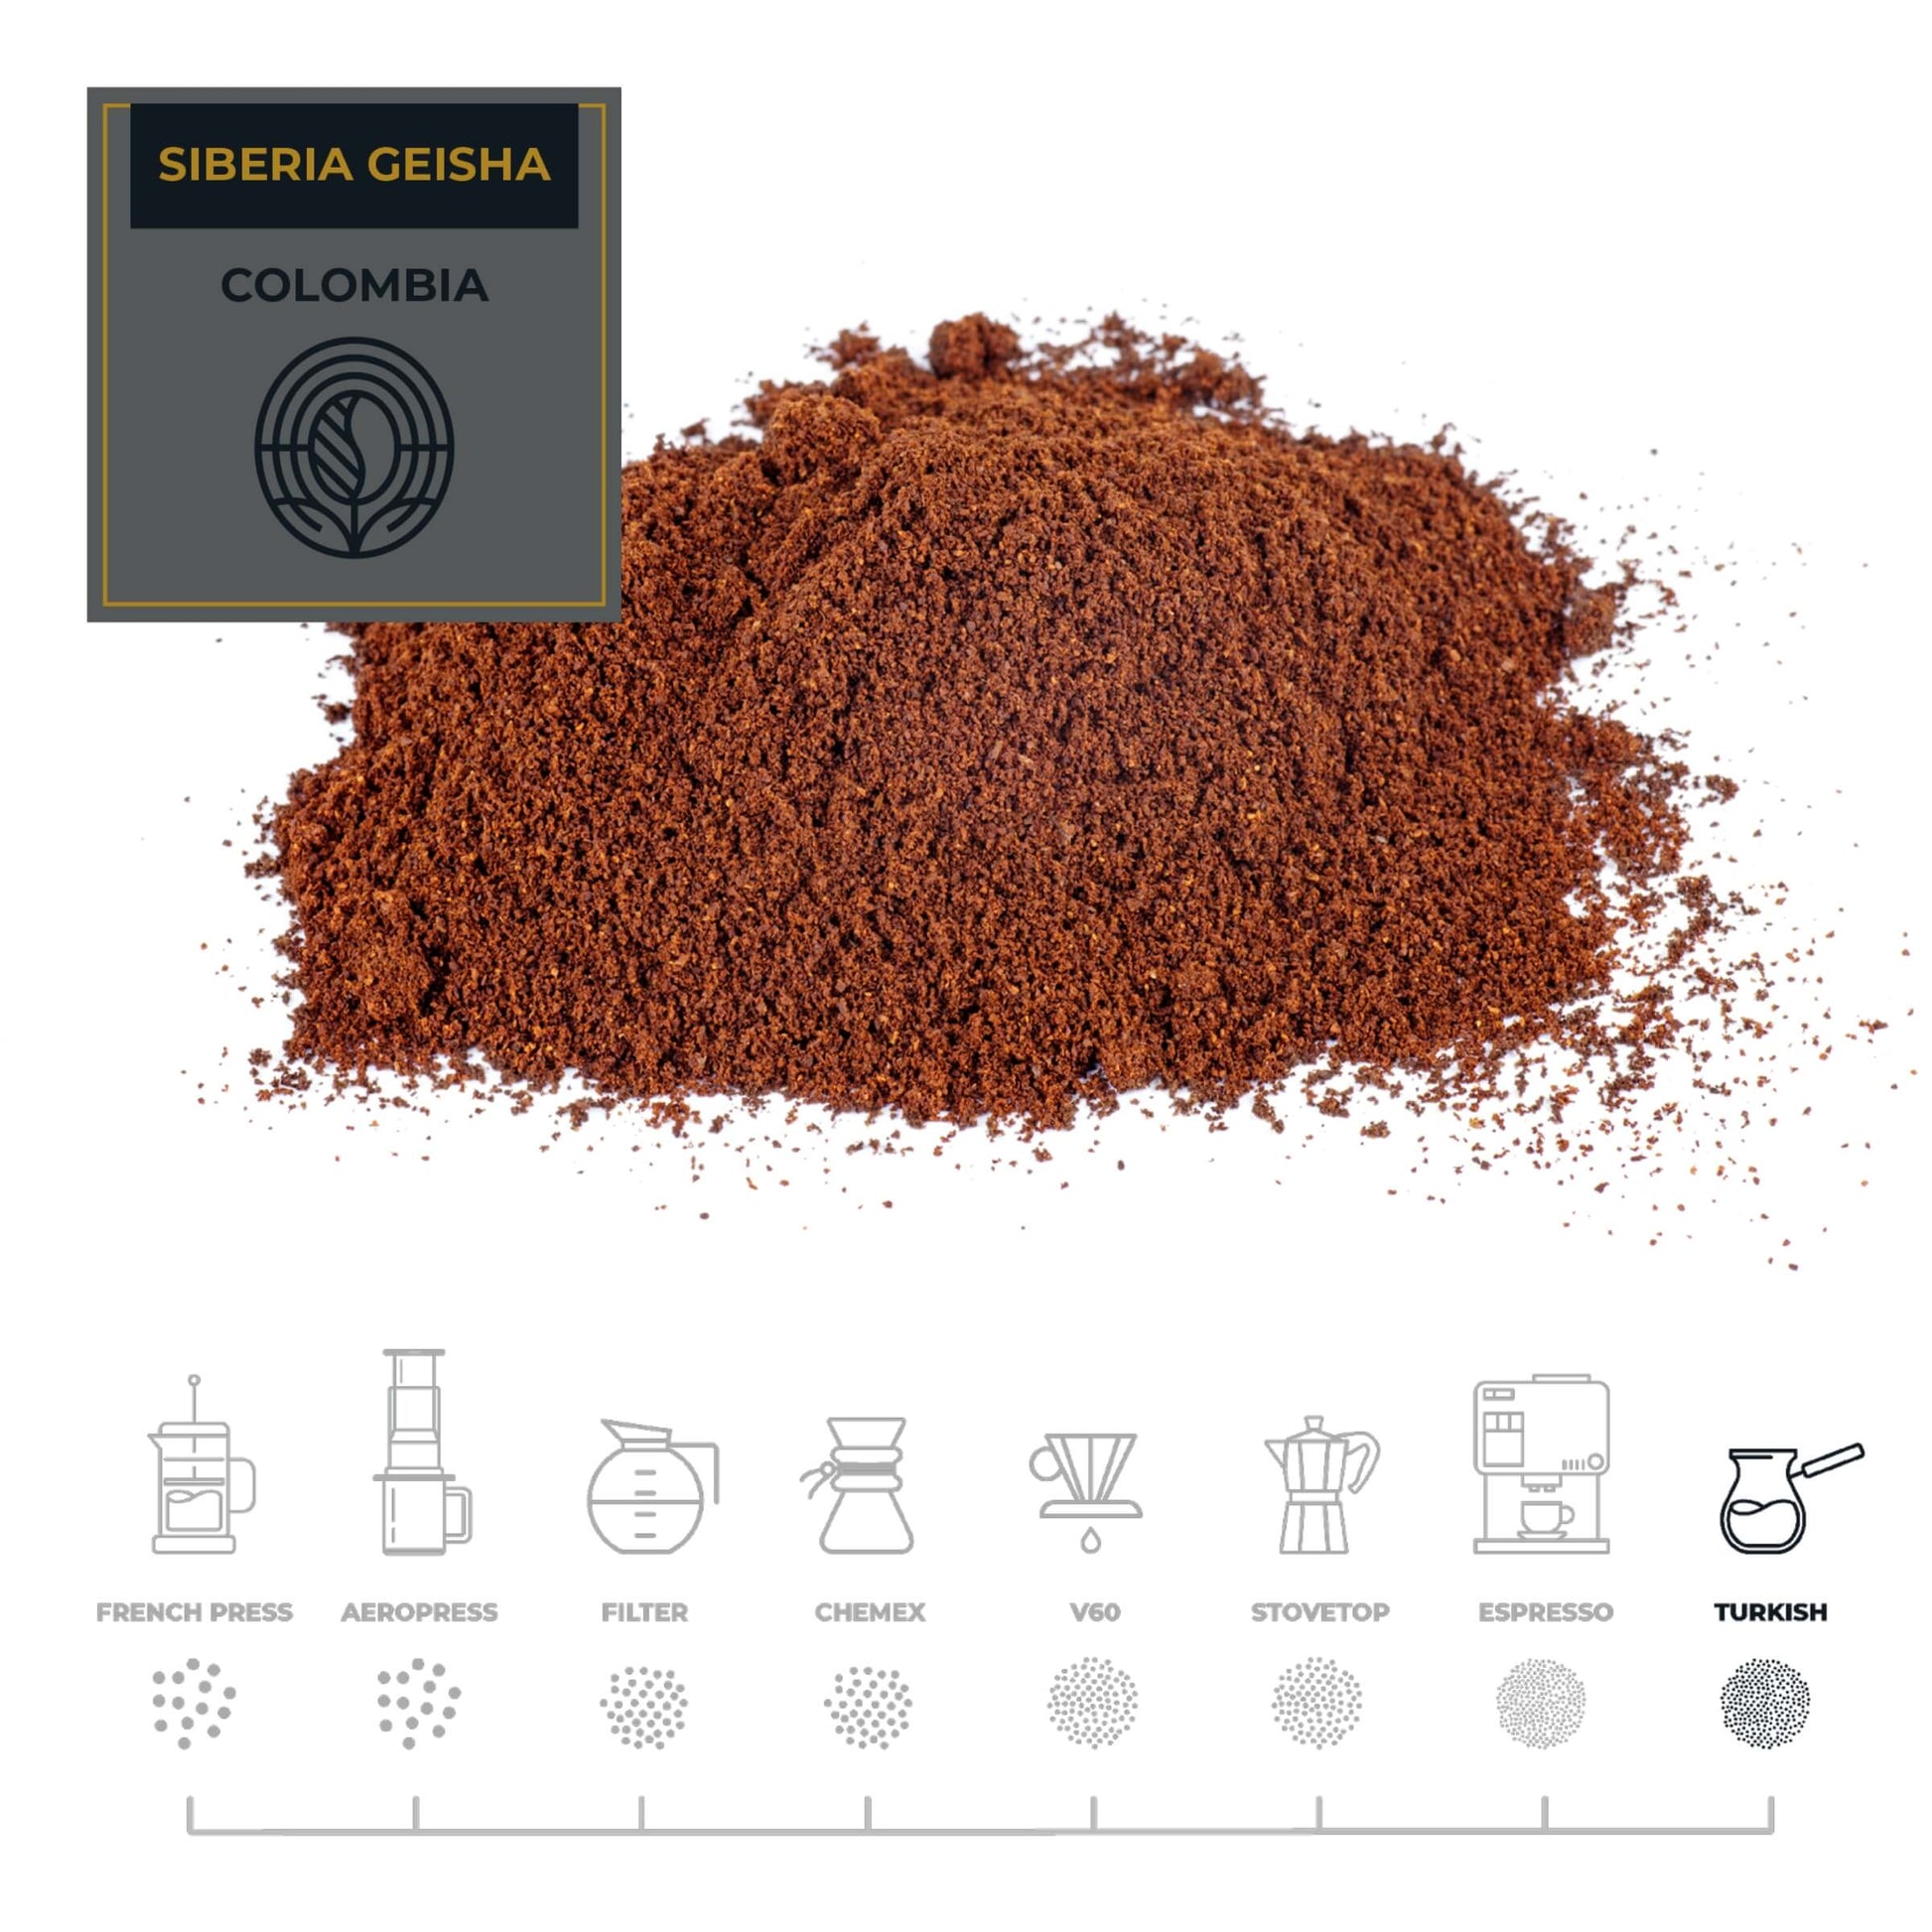 Colombian-Siberia-Geisha-Coffee-Turkish_RAW-Coffee-Company